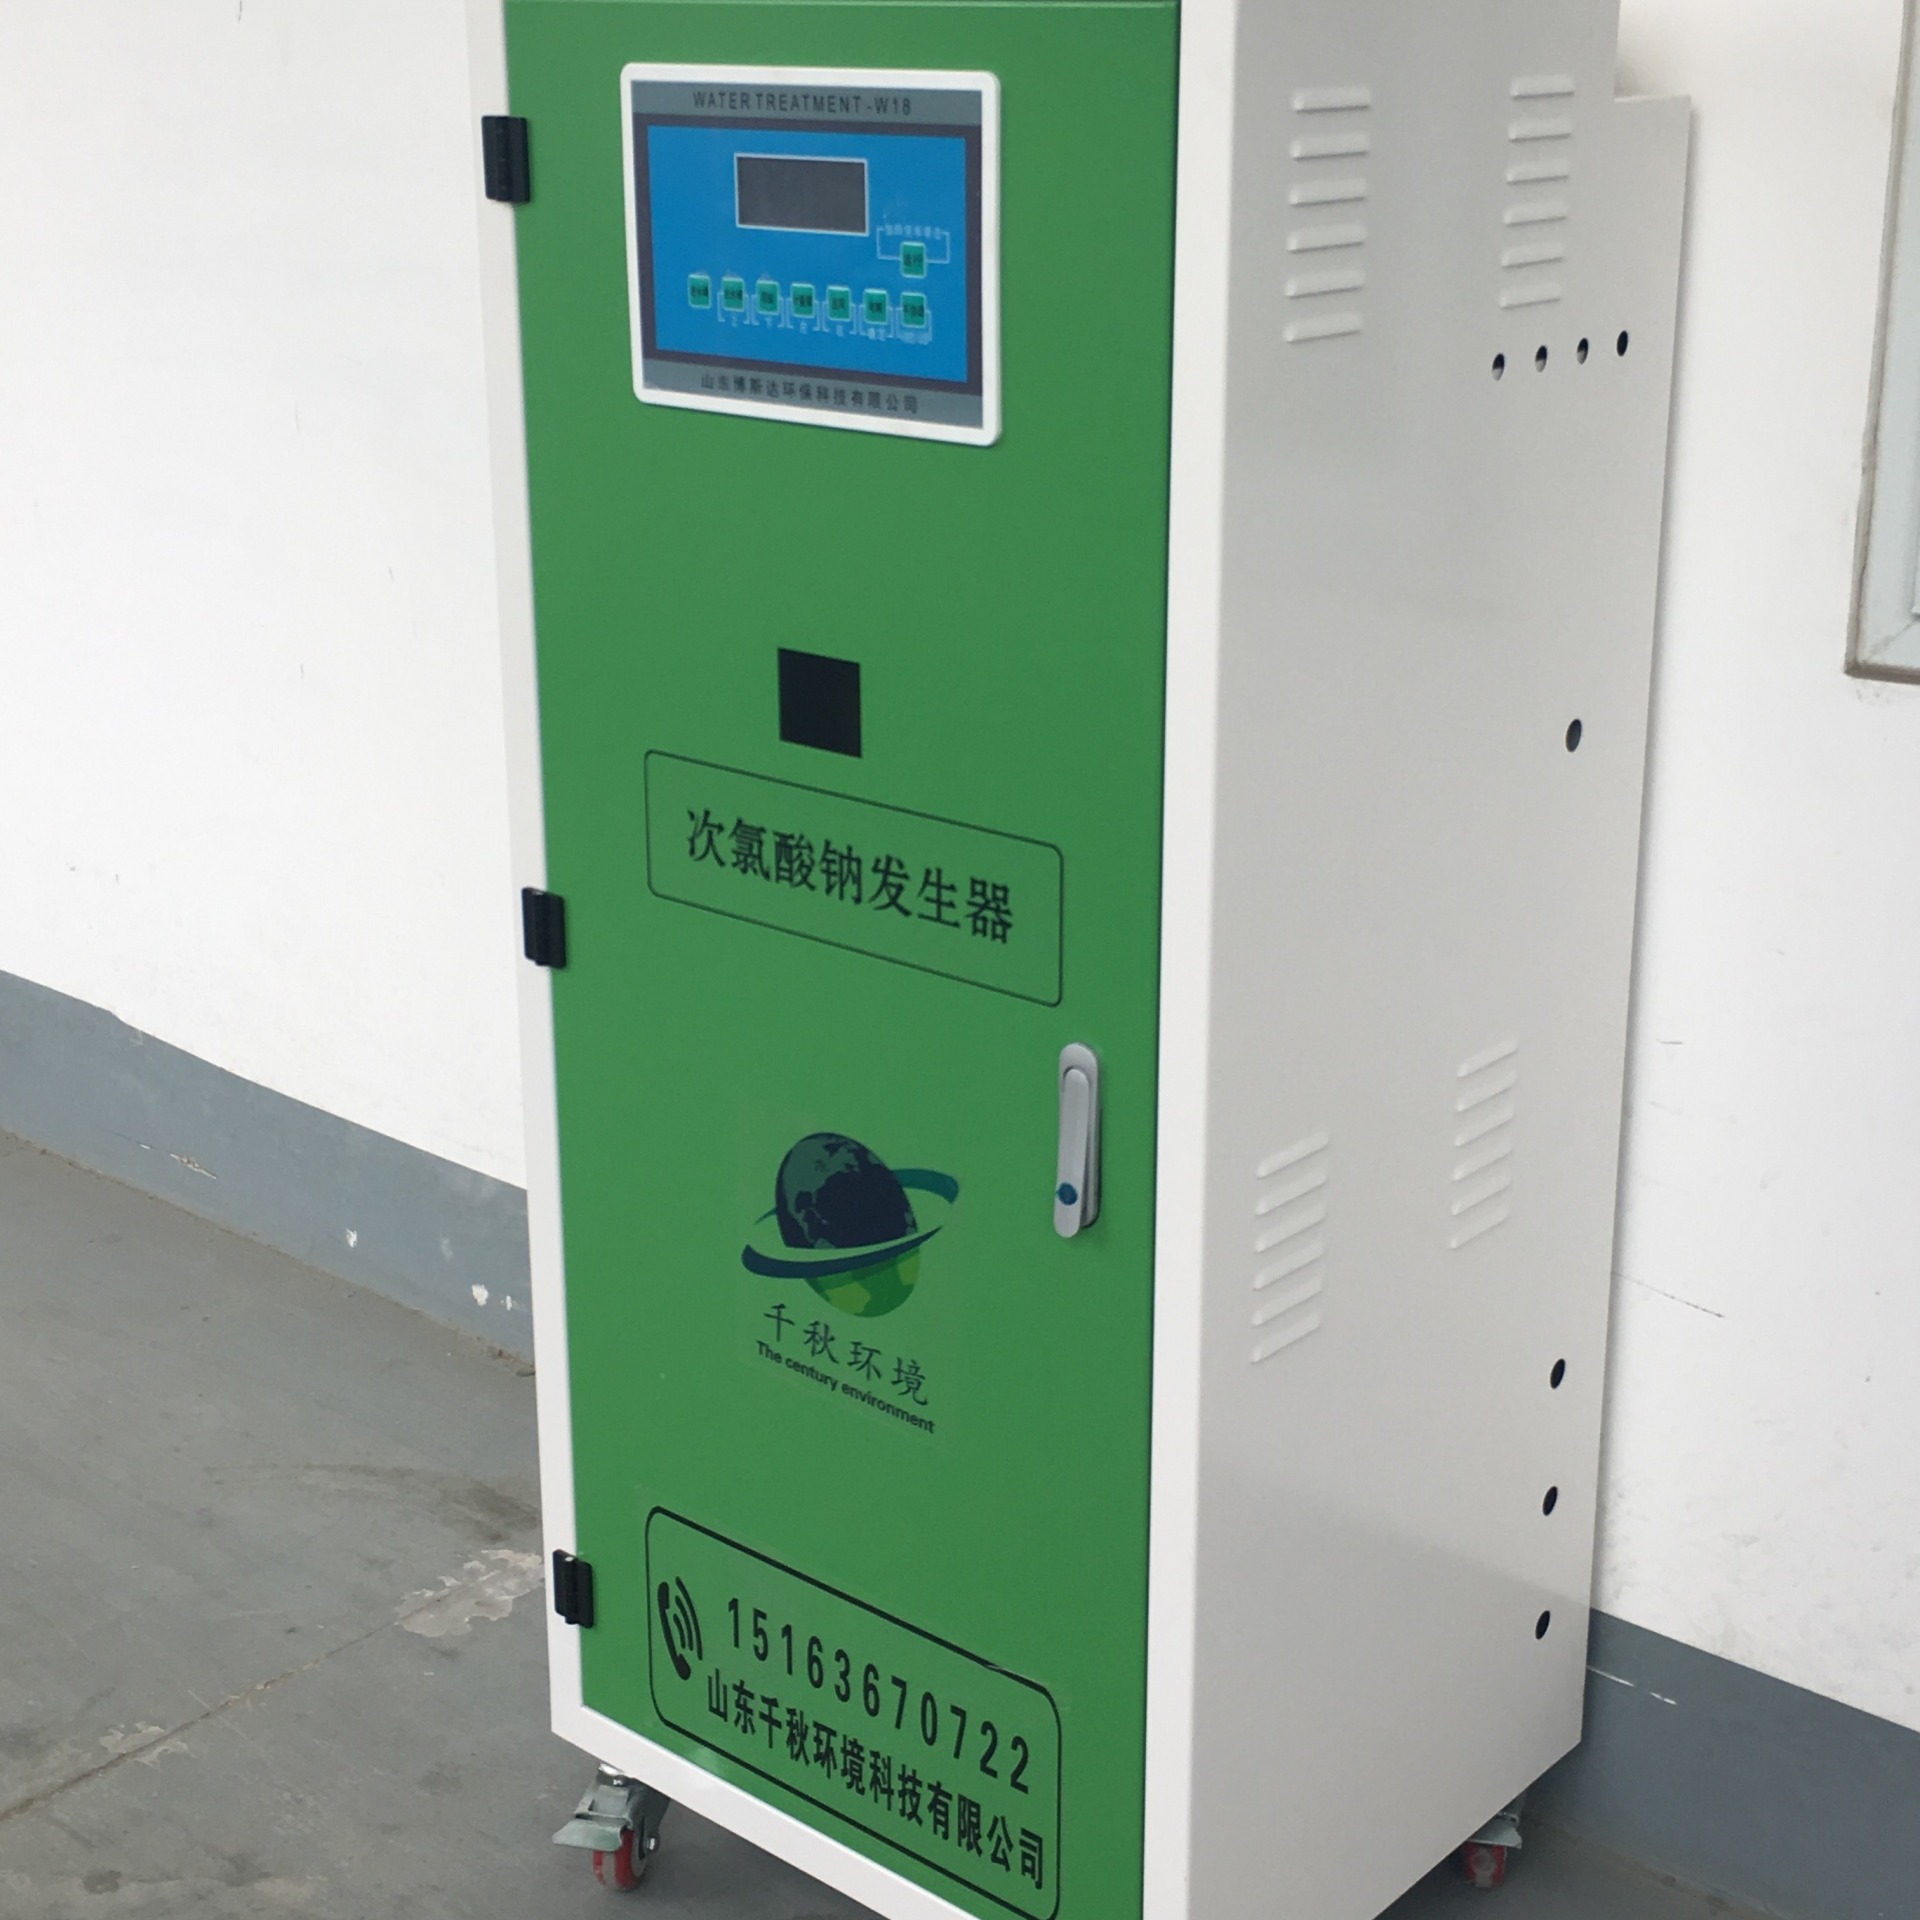 PCR实验室污水处理设备   发热门诊污水处理设备  致远千秋  厂家保证